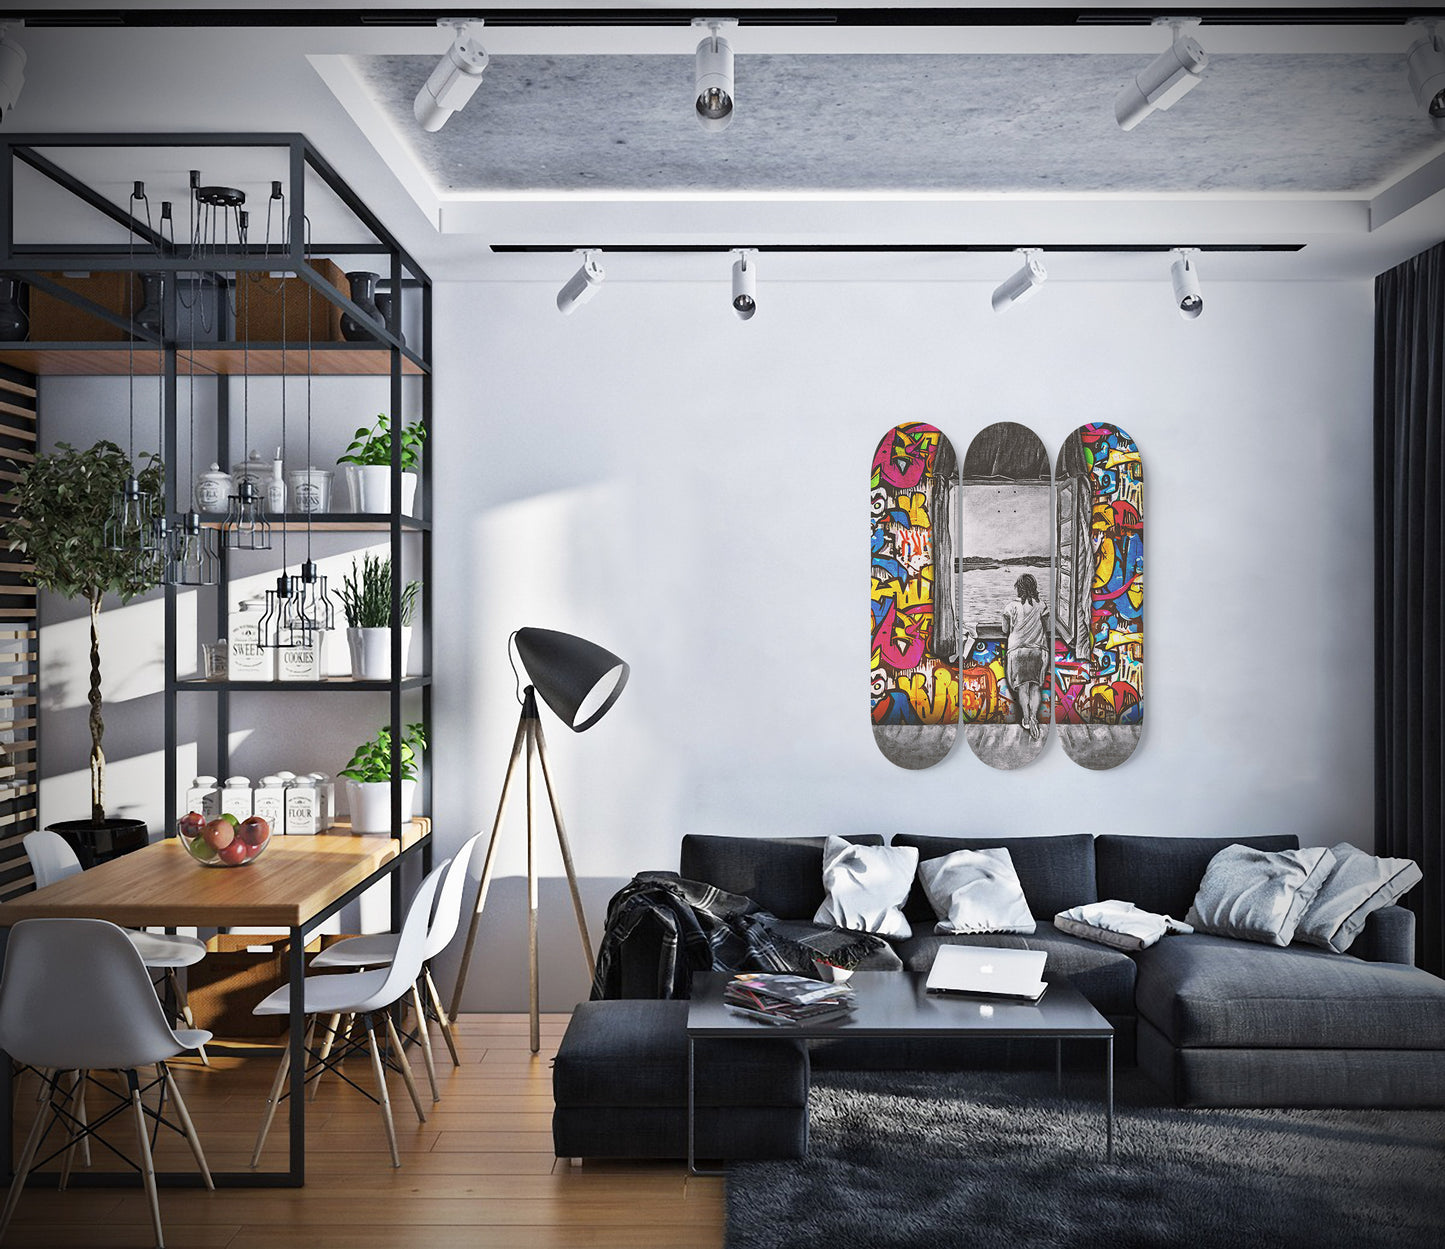 Banksy Lady In The Window Edge Wall Art Print | 3 - Piece Skateboard Art, Living Room Wall Decor, New Home Gift